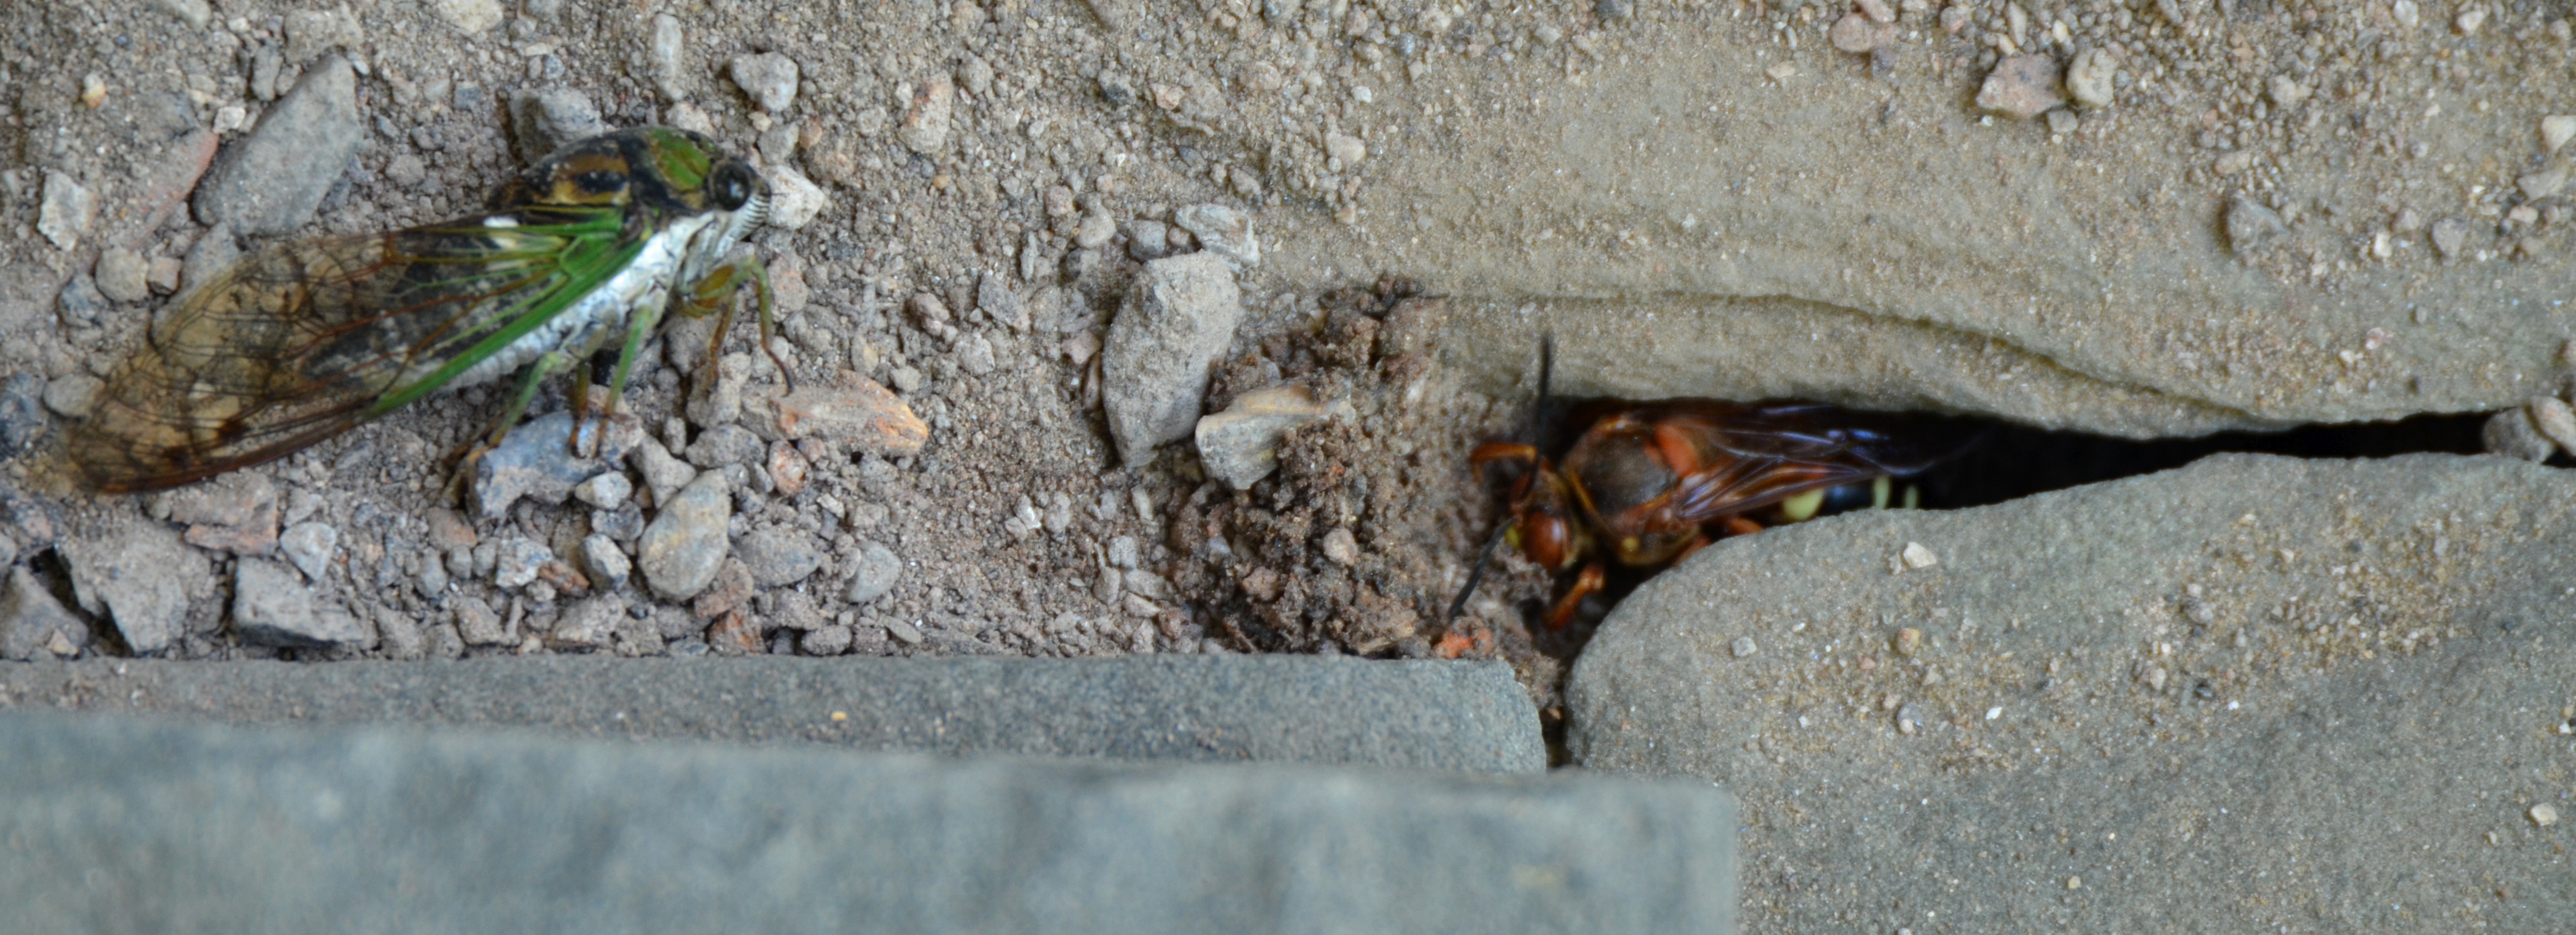 Eastern Cicada Killer wasp drags Cicada into burrow | Before You ...